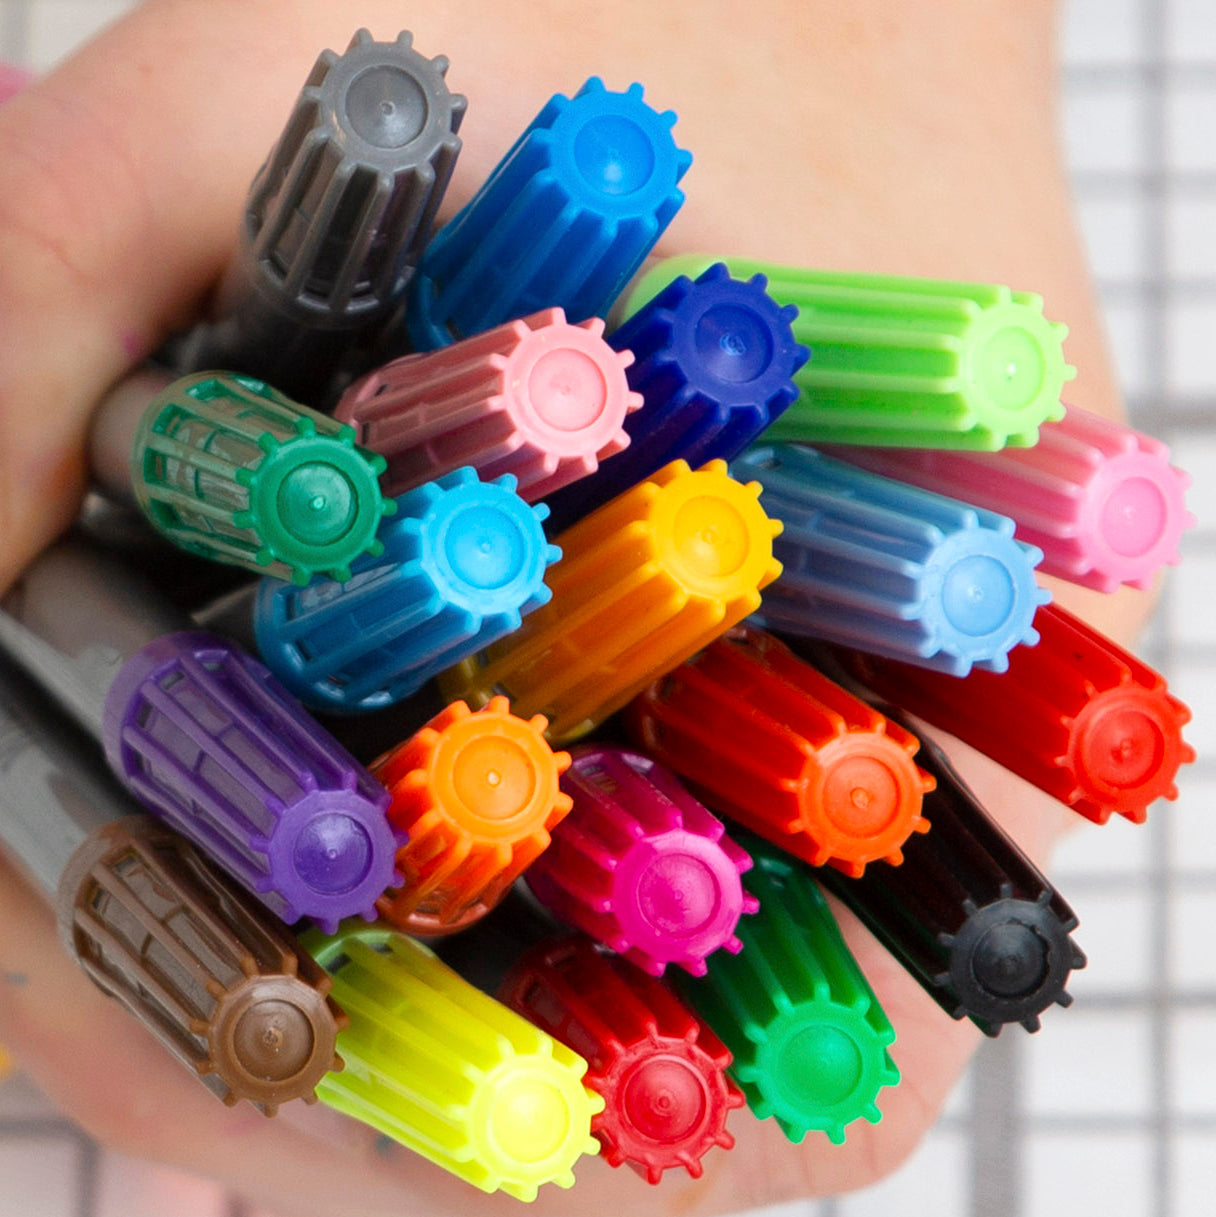 artist set of 20 coloured wash-out pens